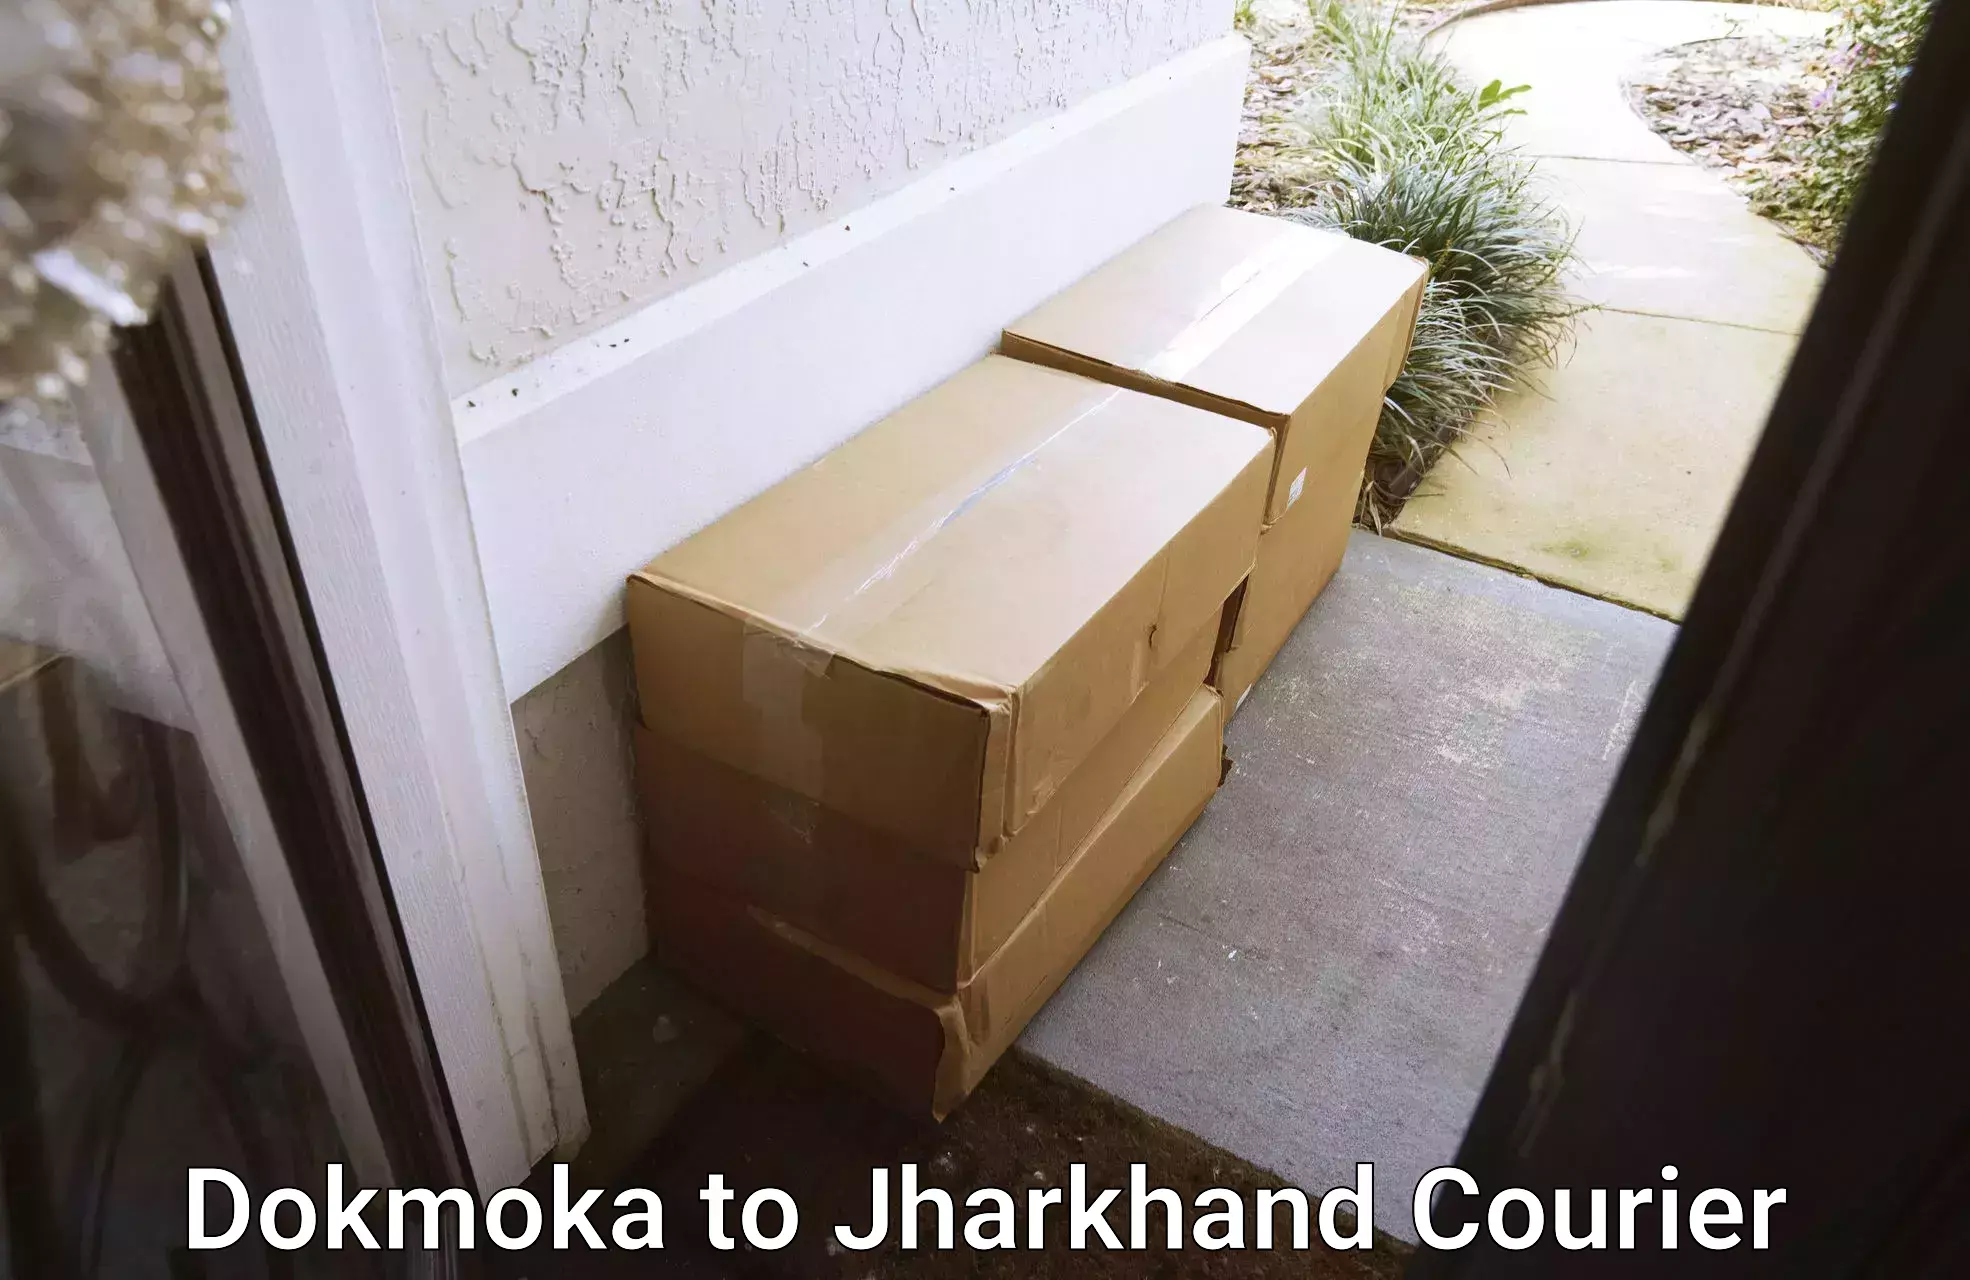 Professional courier handling Dokmoka to Domchanch